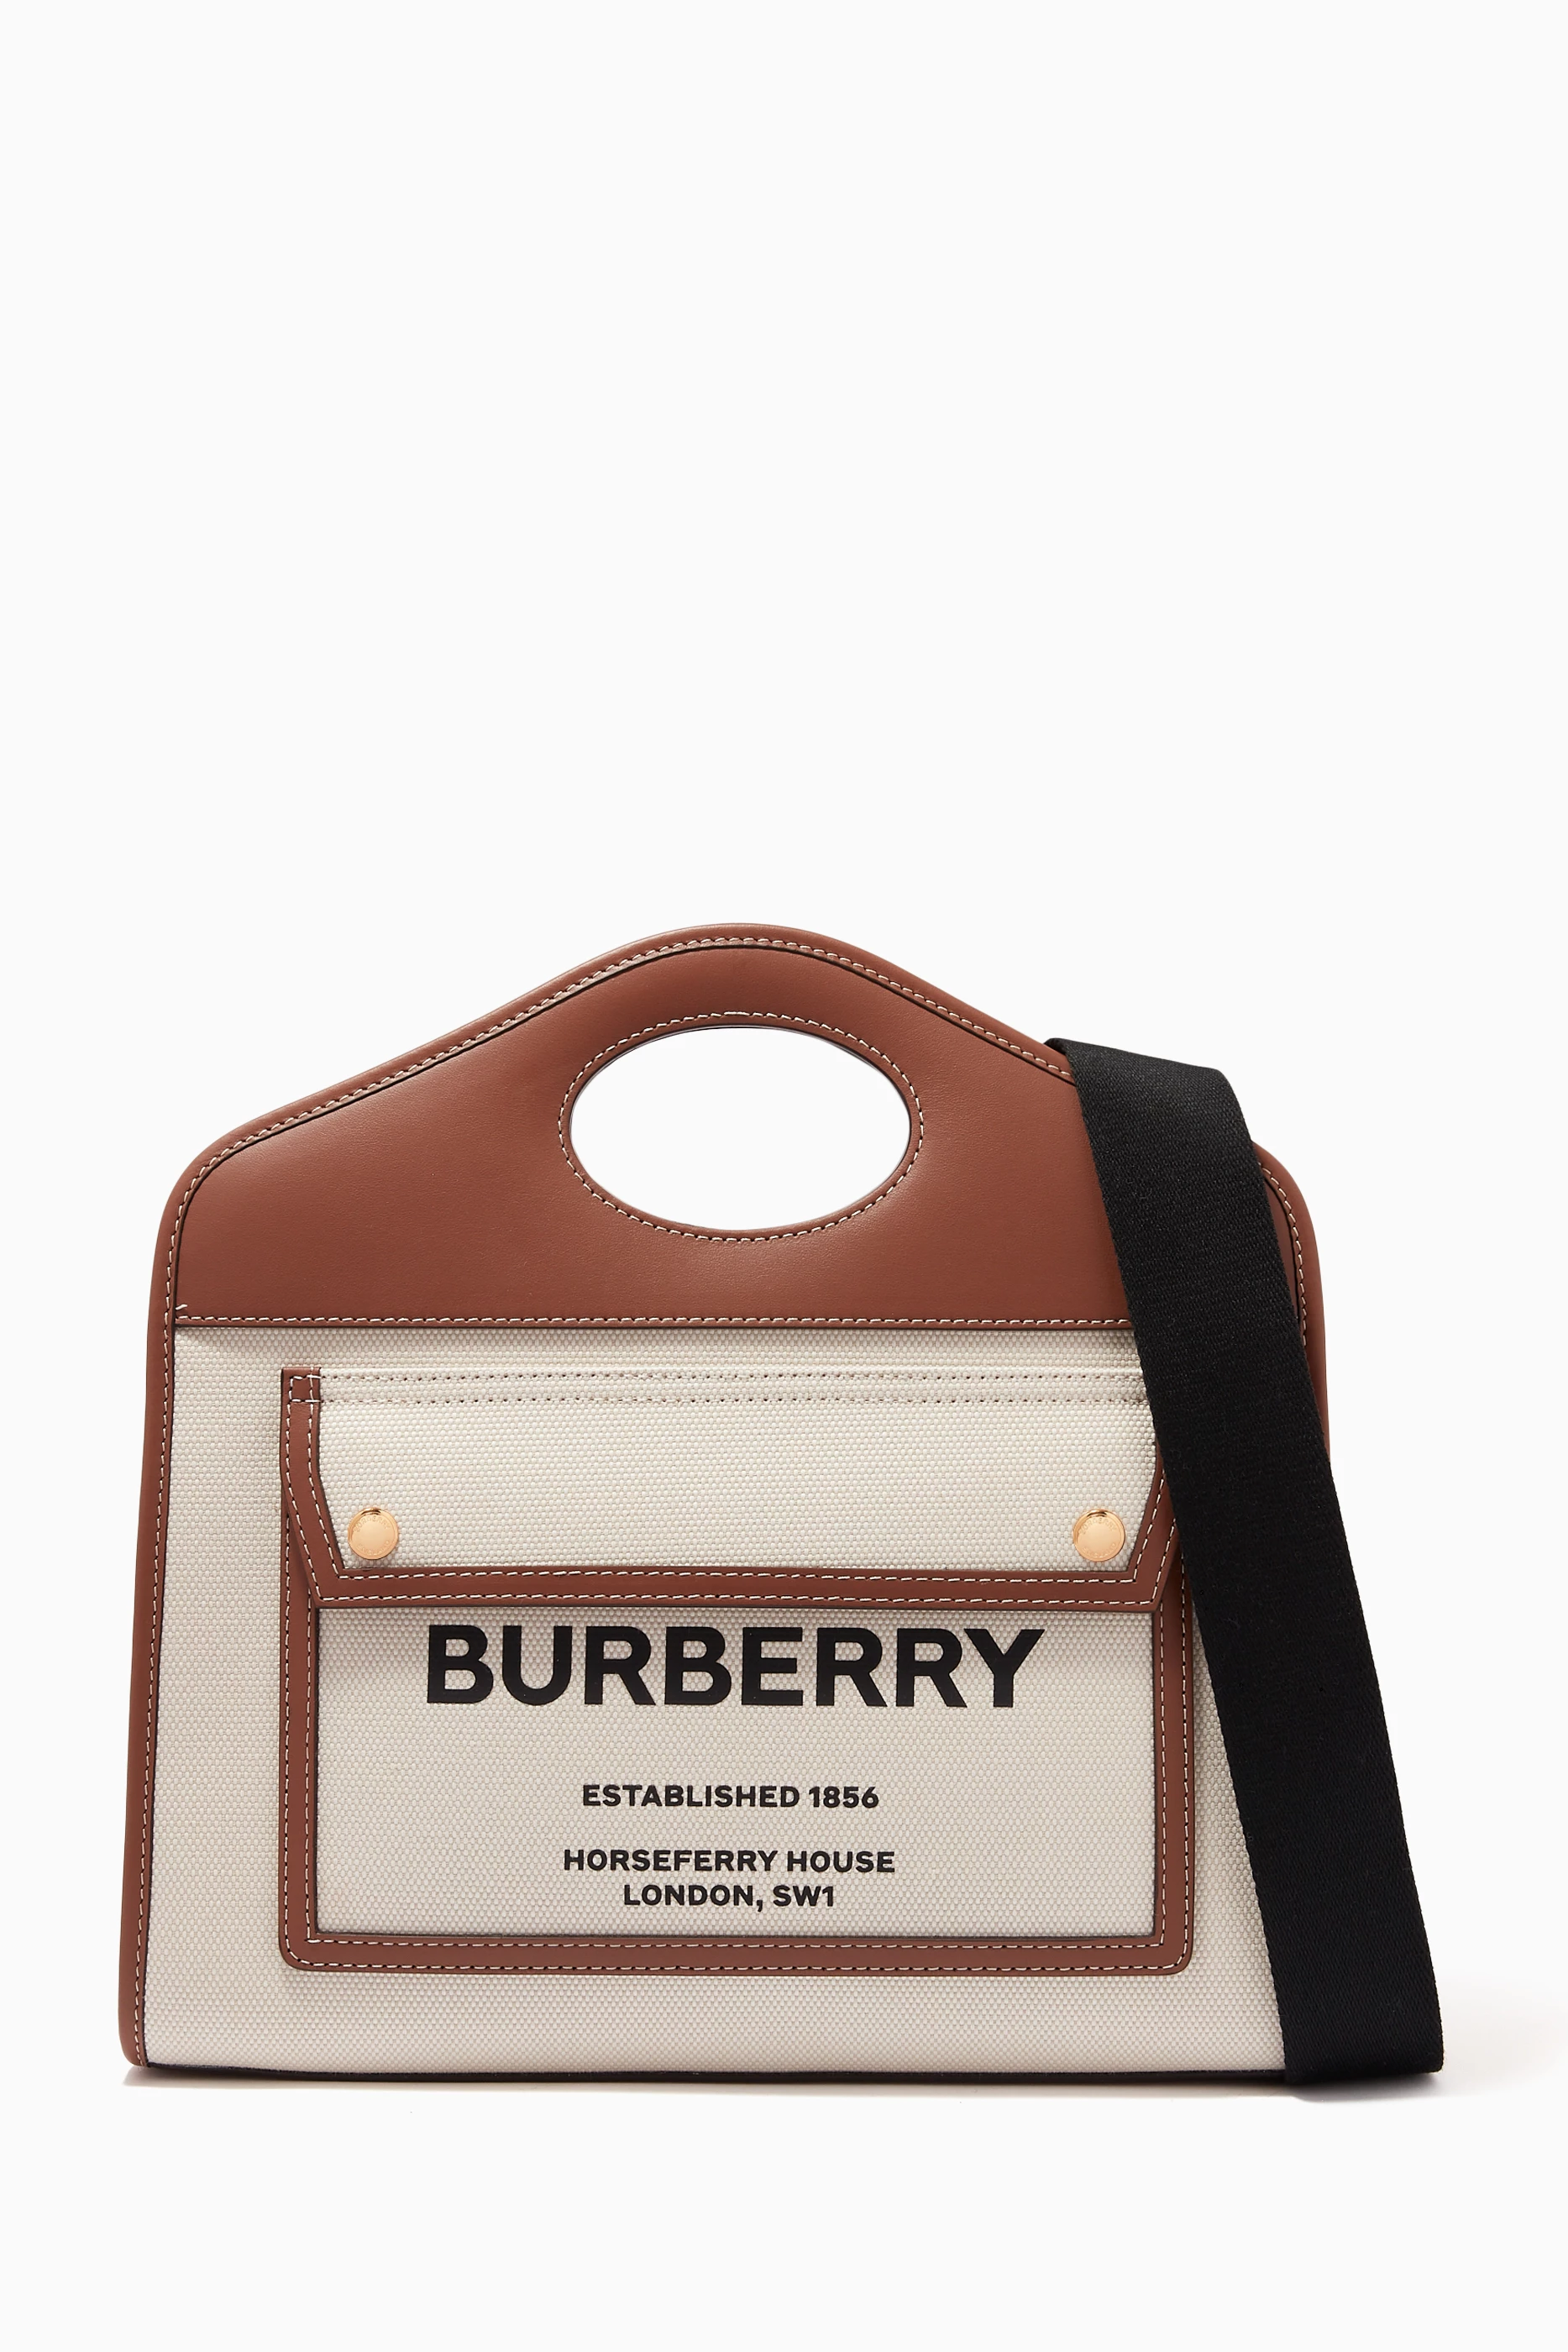 Ll Mn Pocket Dtl Ll6 Tote Bag - Burberry - Black/Black - Cotton